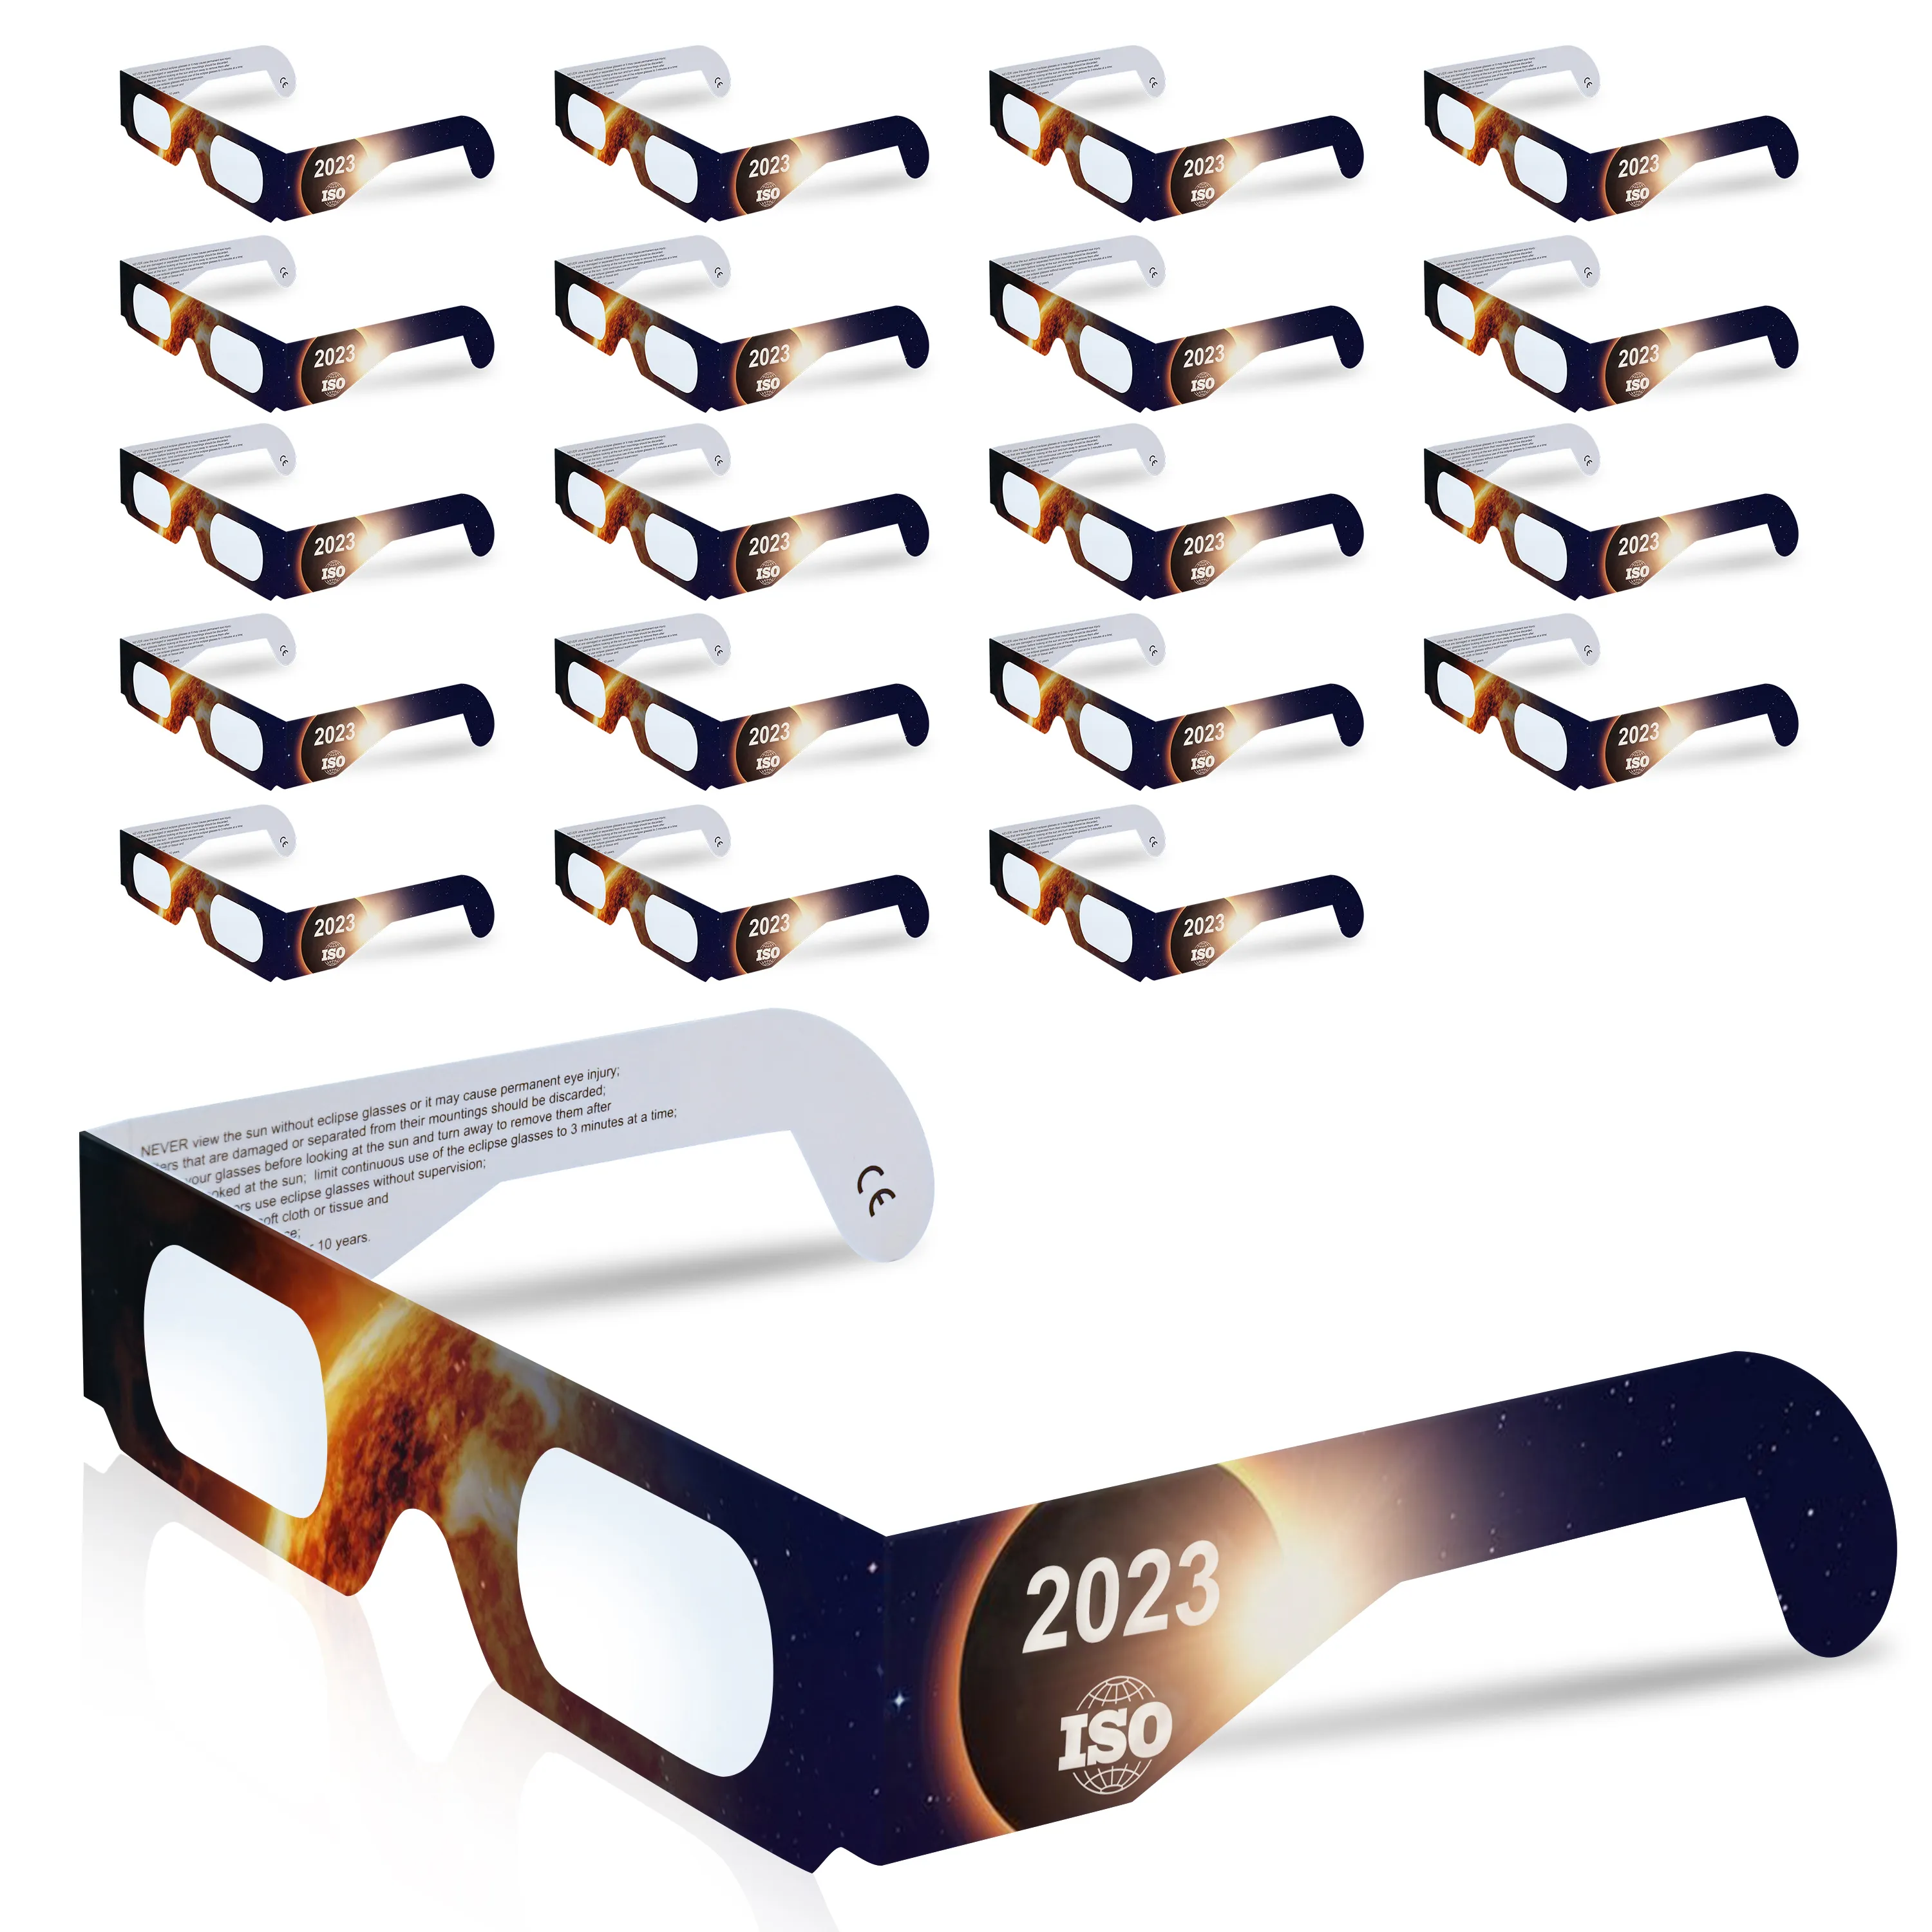 20 PCS نظارات Eclipse الشمسية من قبل NASA المصنع المعتمد CE و ISO معتمدة للجودة البصرية لتوفير مشاهدة شمس آمنة أثناء الكسوف الشمسي